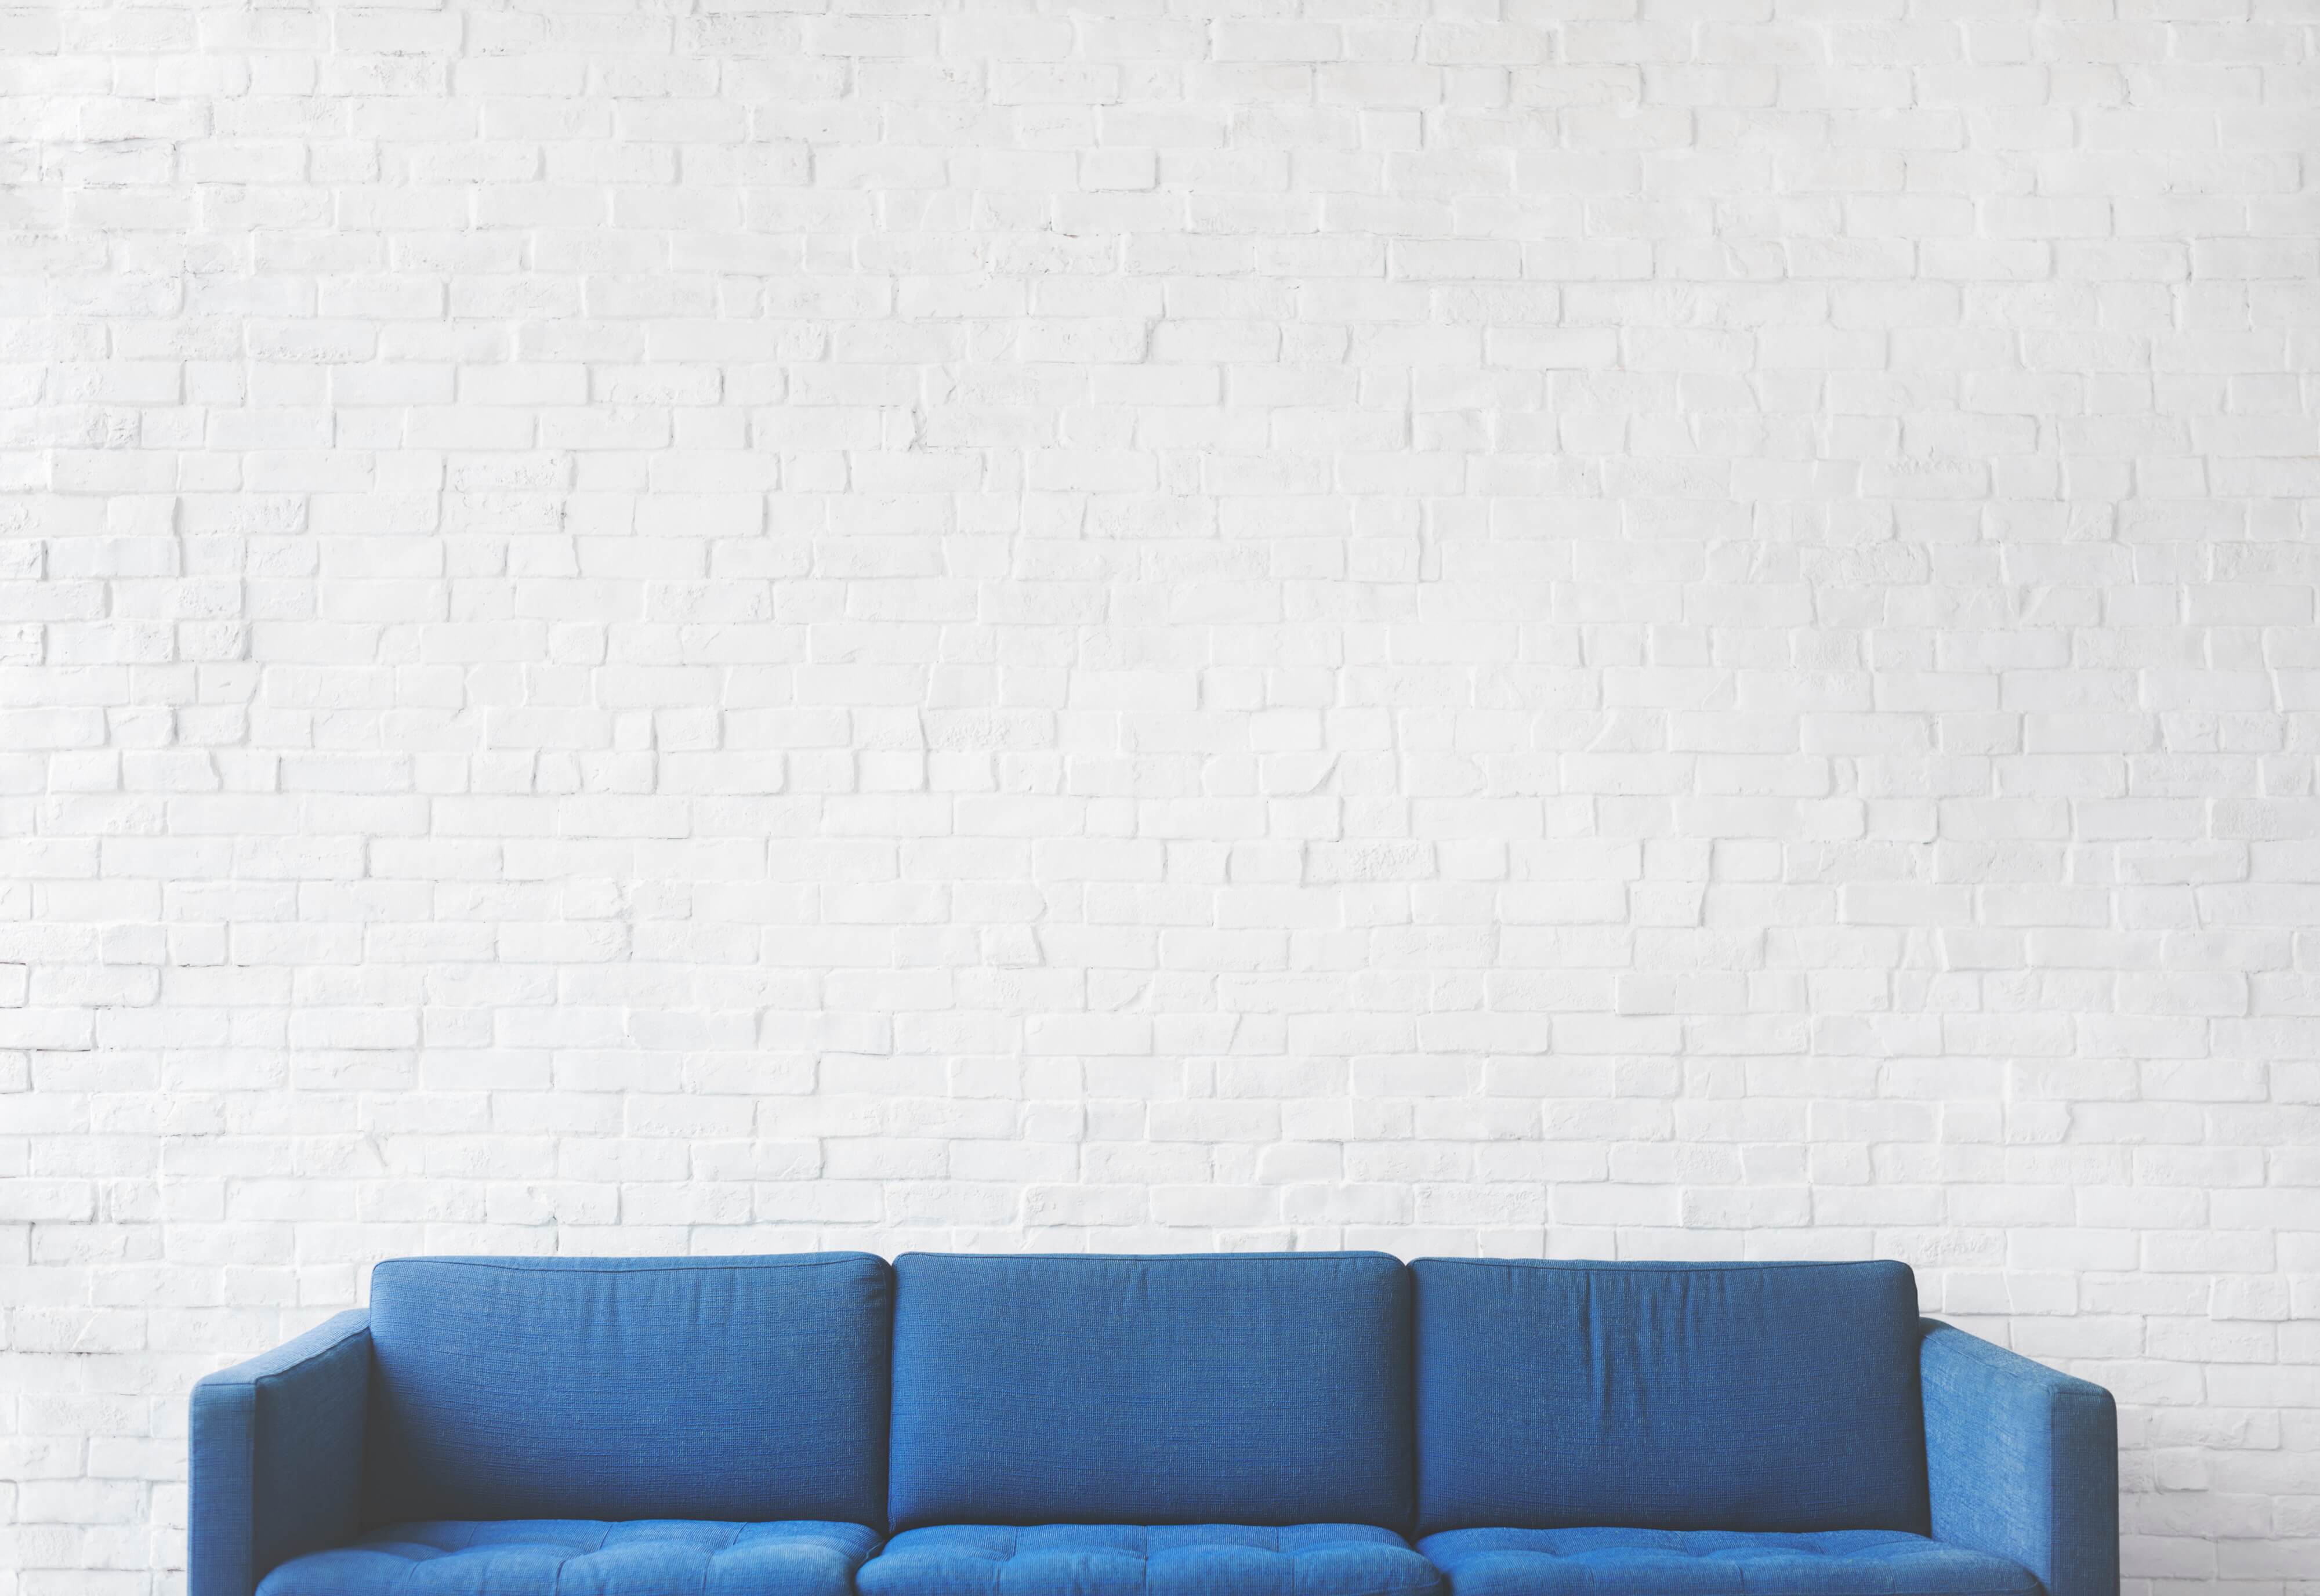 empty blue sofa set against white brick wall